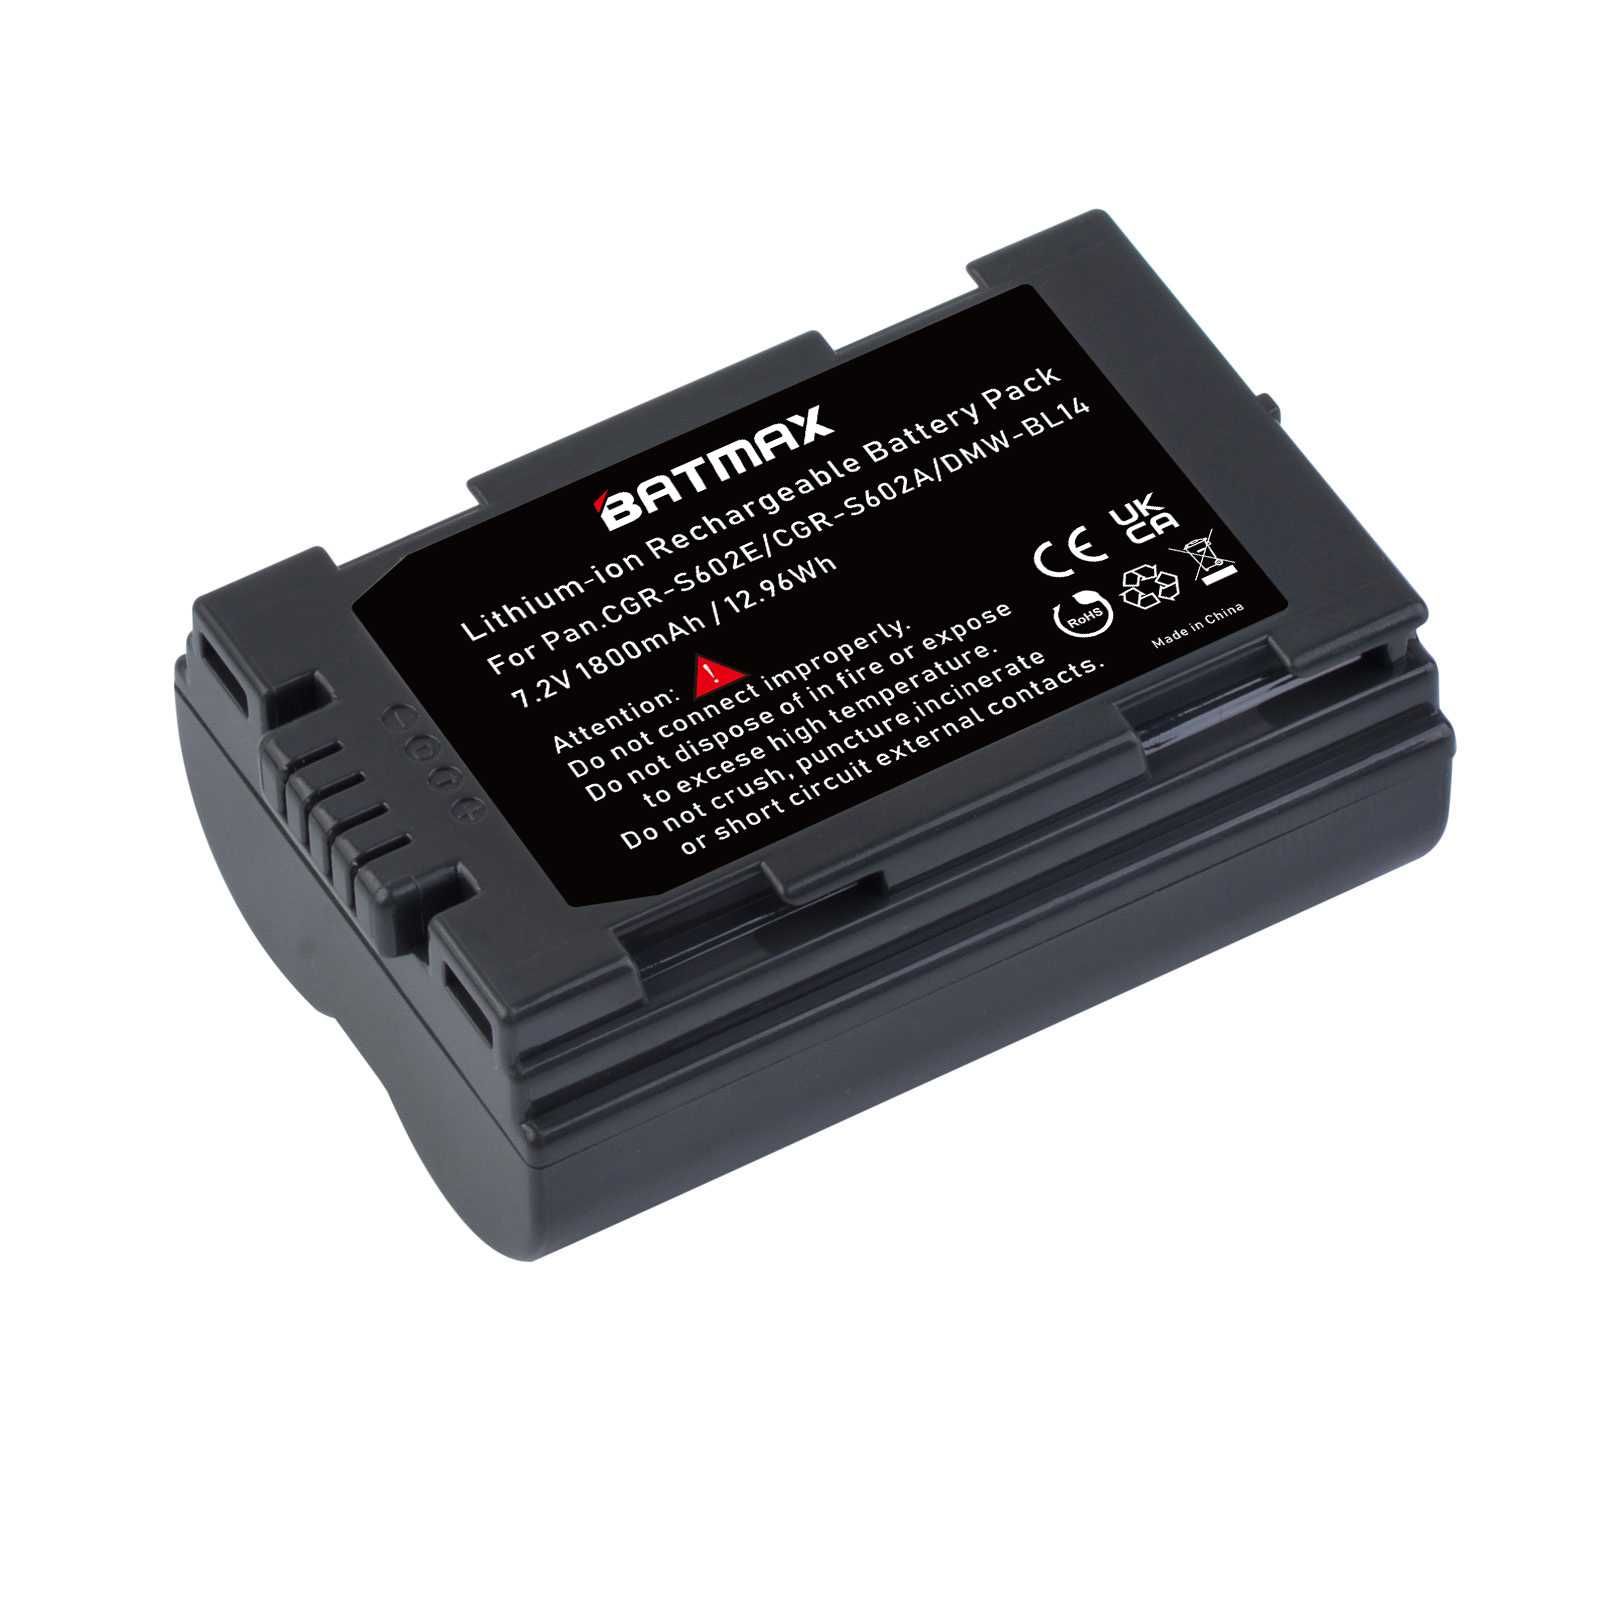 Батерия CGR-S602 / DMW-BL14 / BP-DC1 / BP-DC3 за Panasonic / Leica